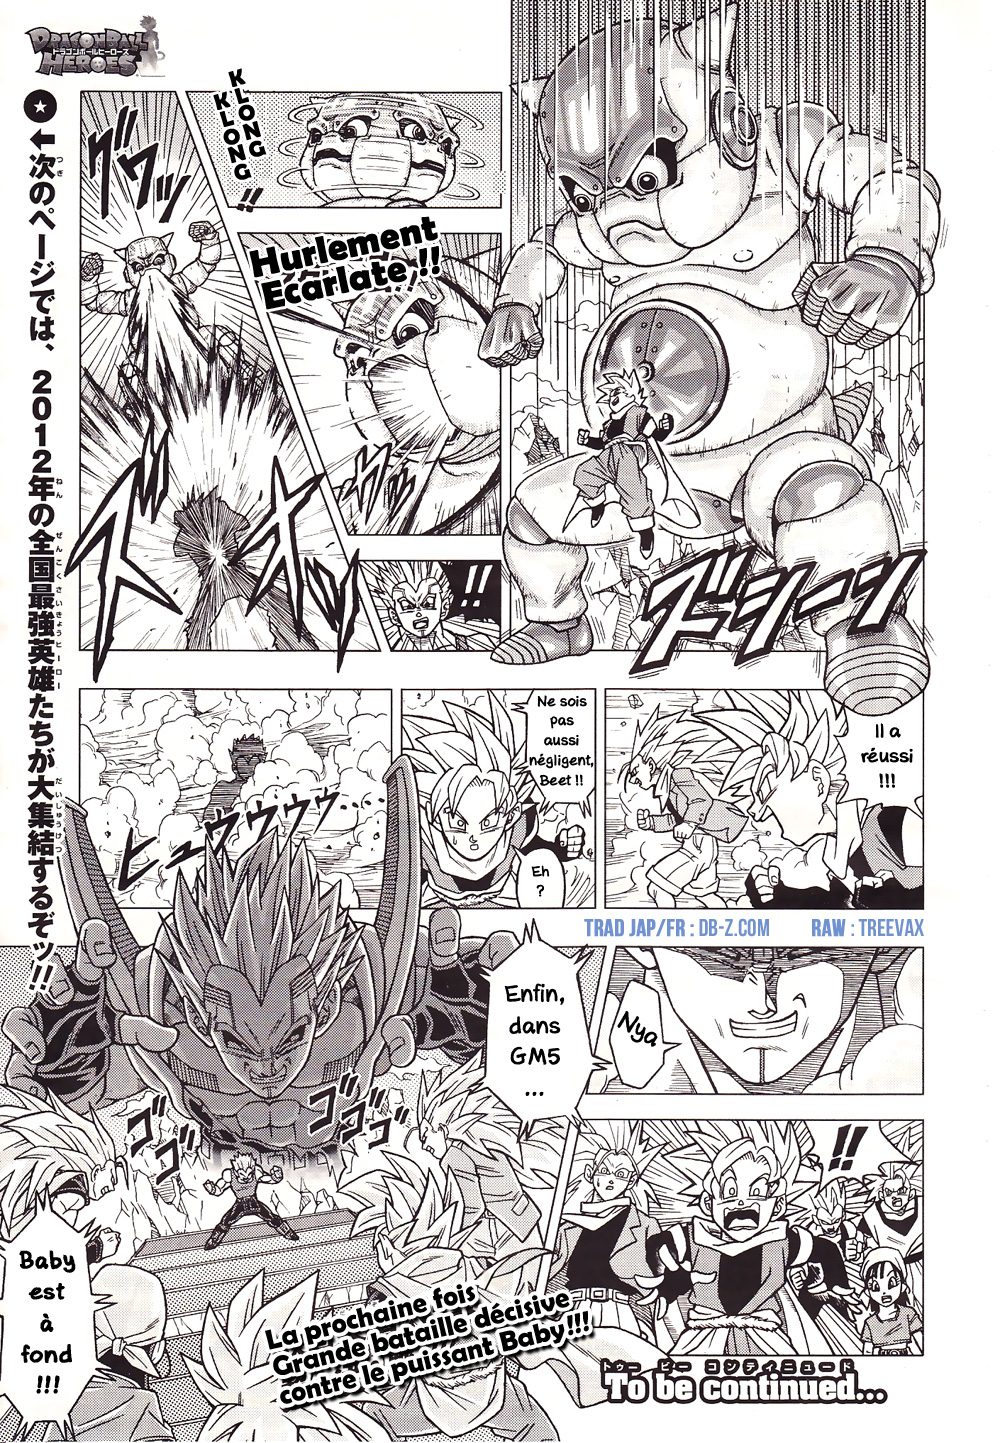 Dragon Ball GT - Baby Vegeta by DBCProject on DeviantArt  Dragon ball gt, Dragon  ball super manga, Anime dragon ball goku